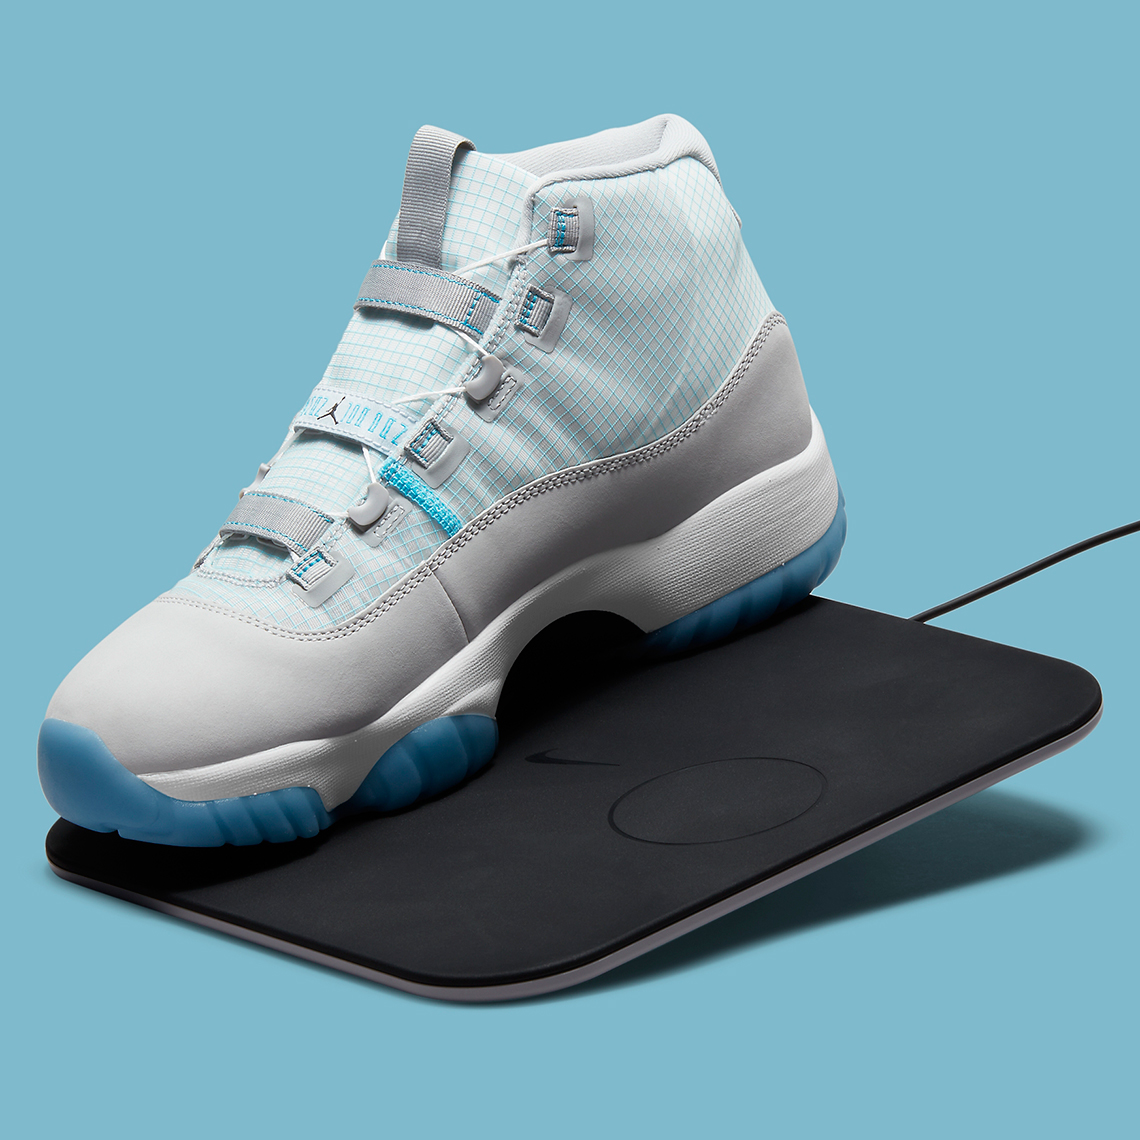 Air Jordan 11 Adapt White Blue Release Date 7